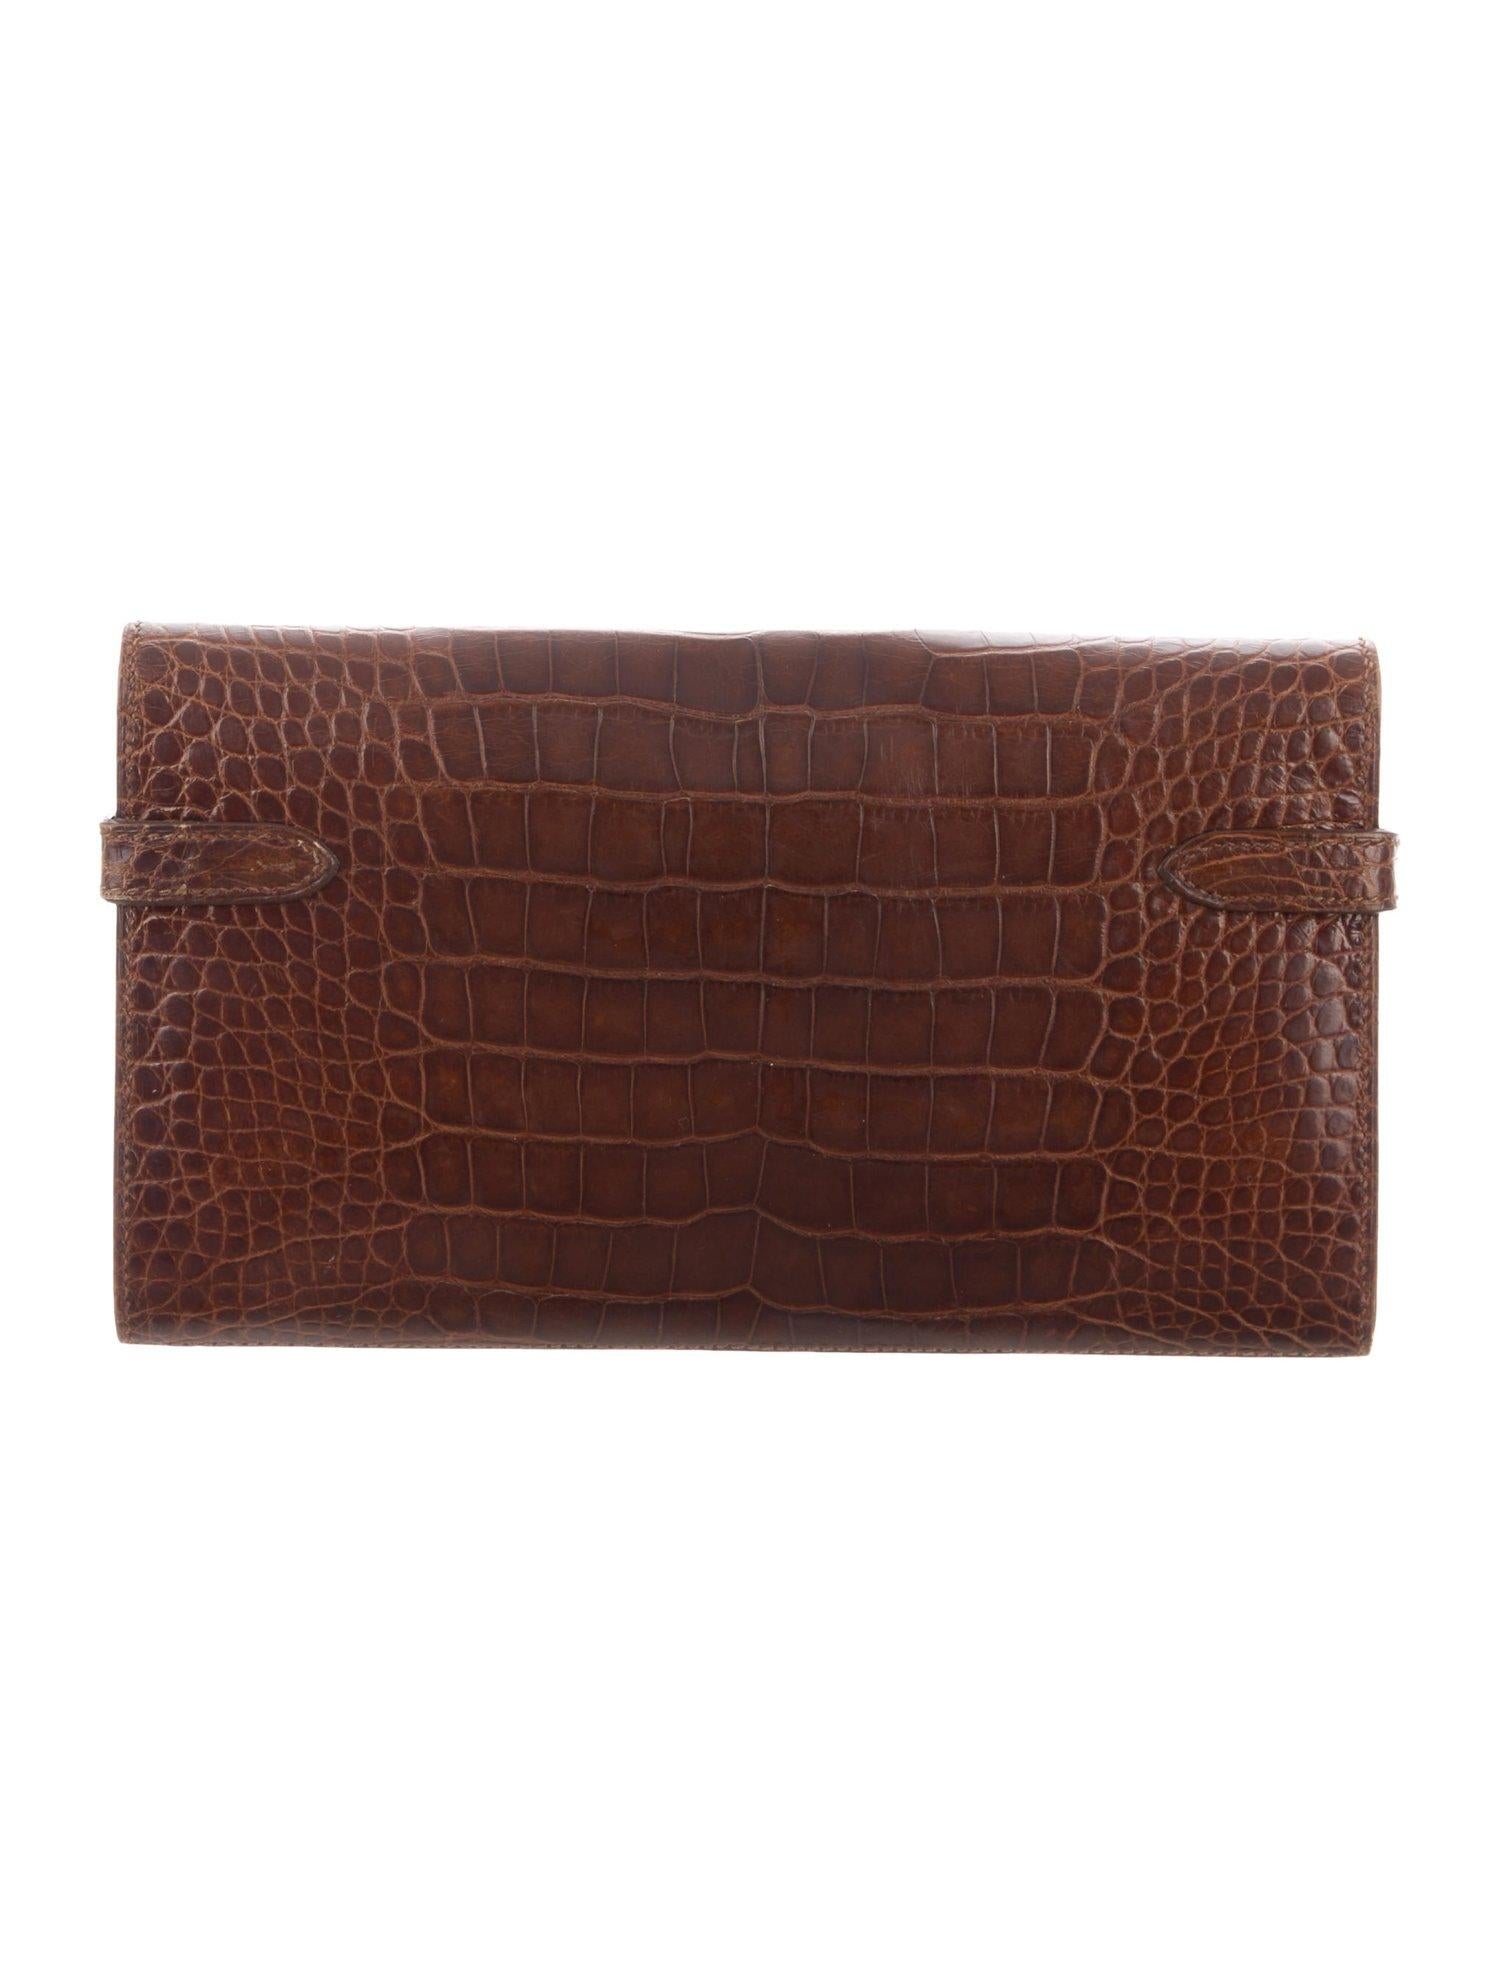 Women's Hermes Chocolate Brown Alligator Palladium Kelly Clutch Wallet Bag in Box